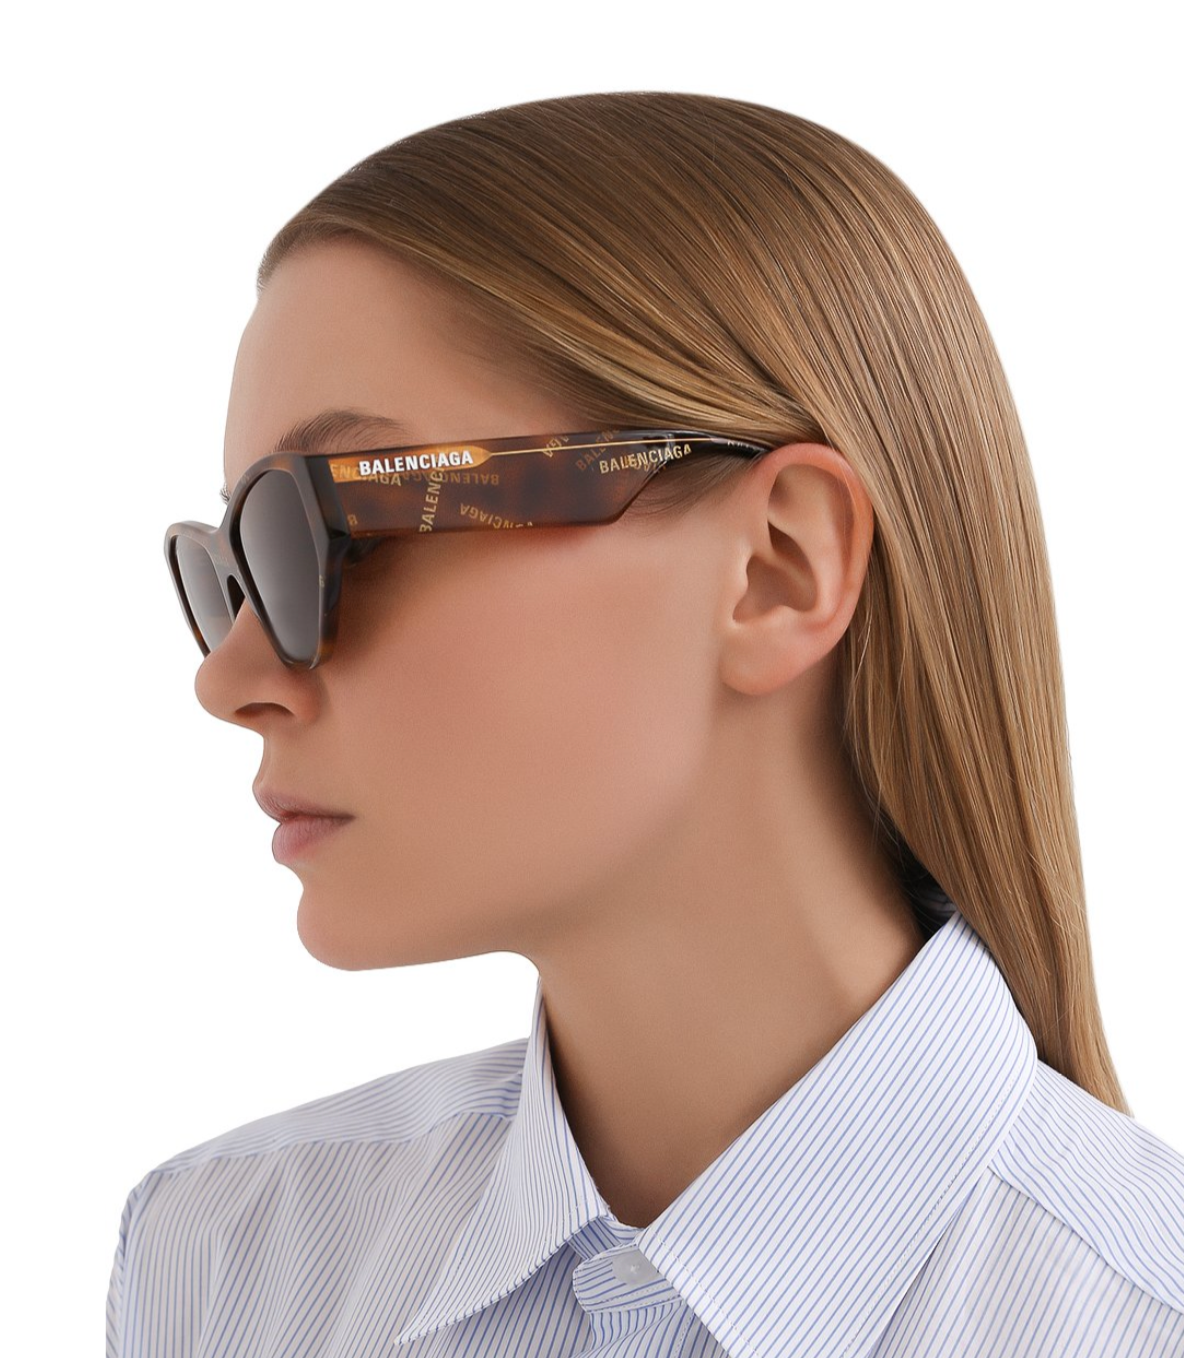 Balenciaga BB0097S-003-54 54mm New Sunglasses